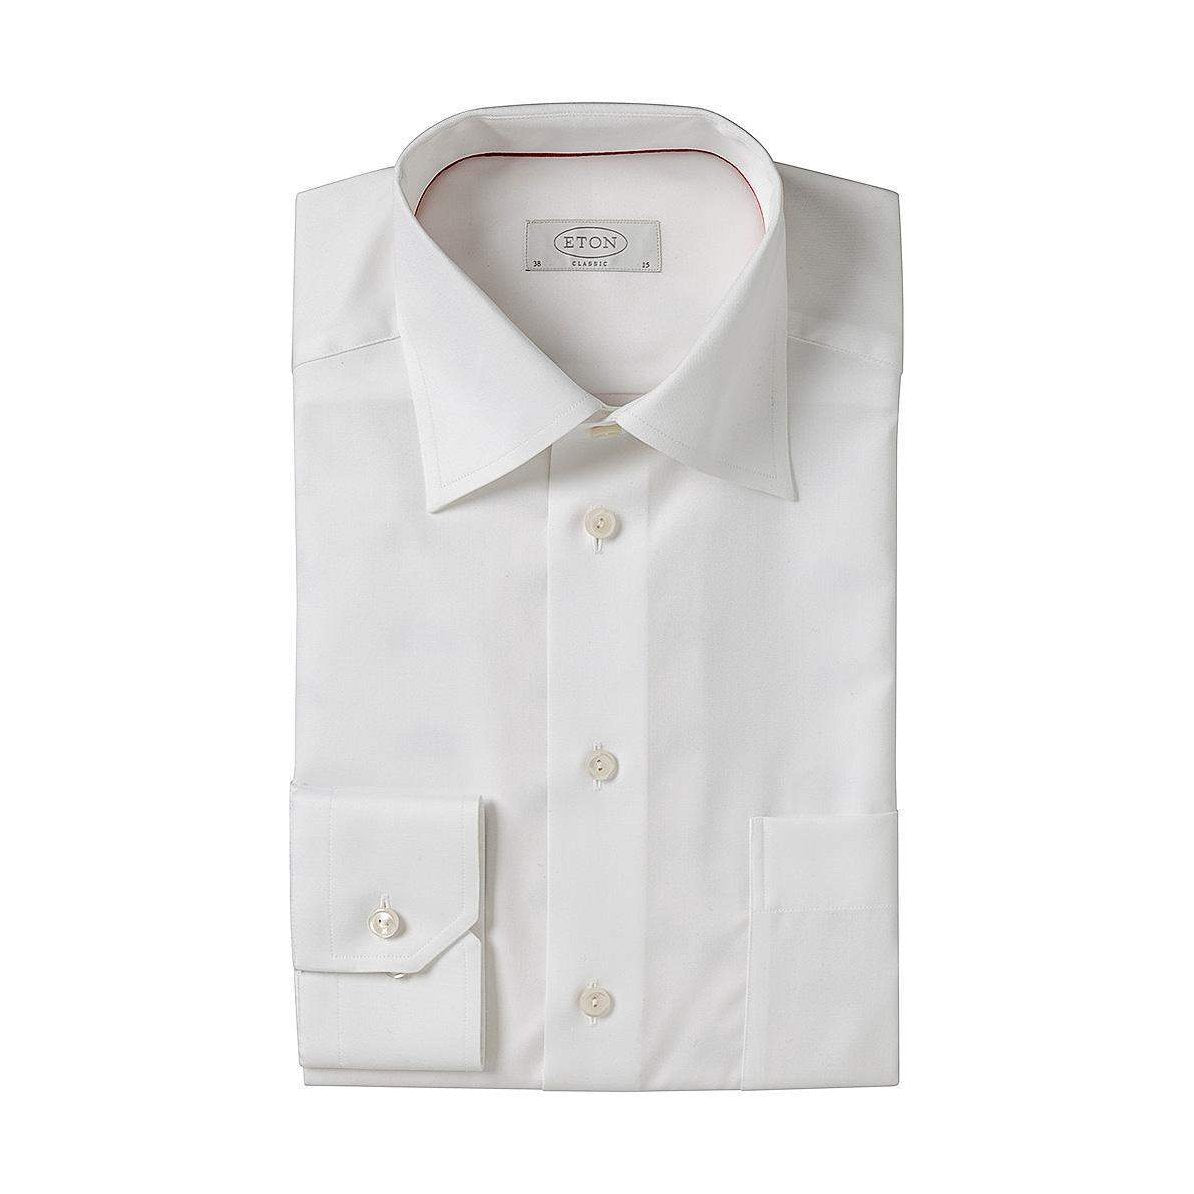 ETON Plain Twill Classis Shirt WHITE